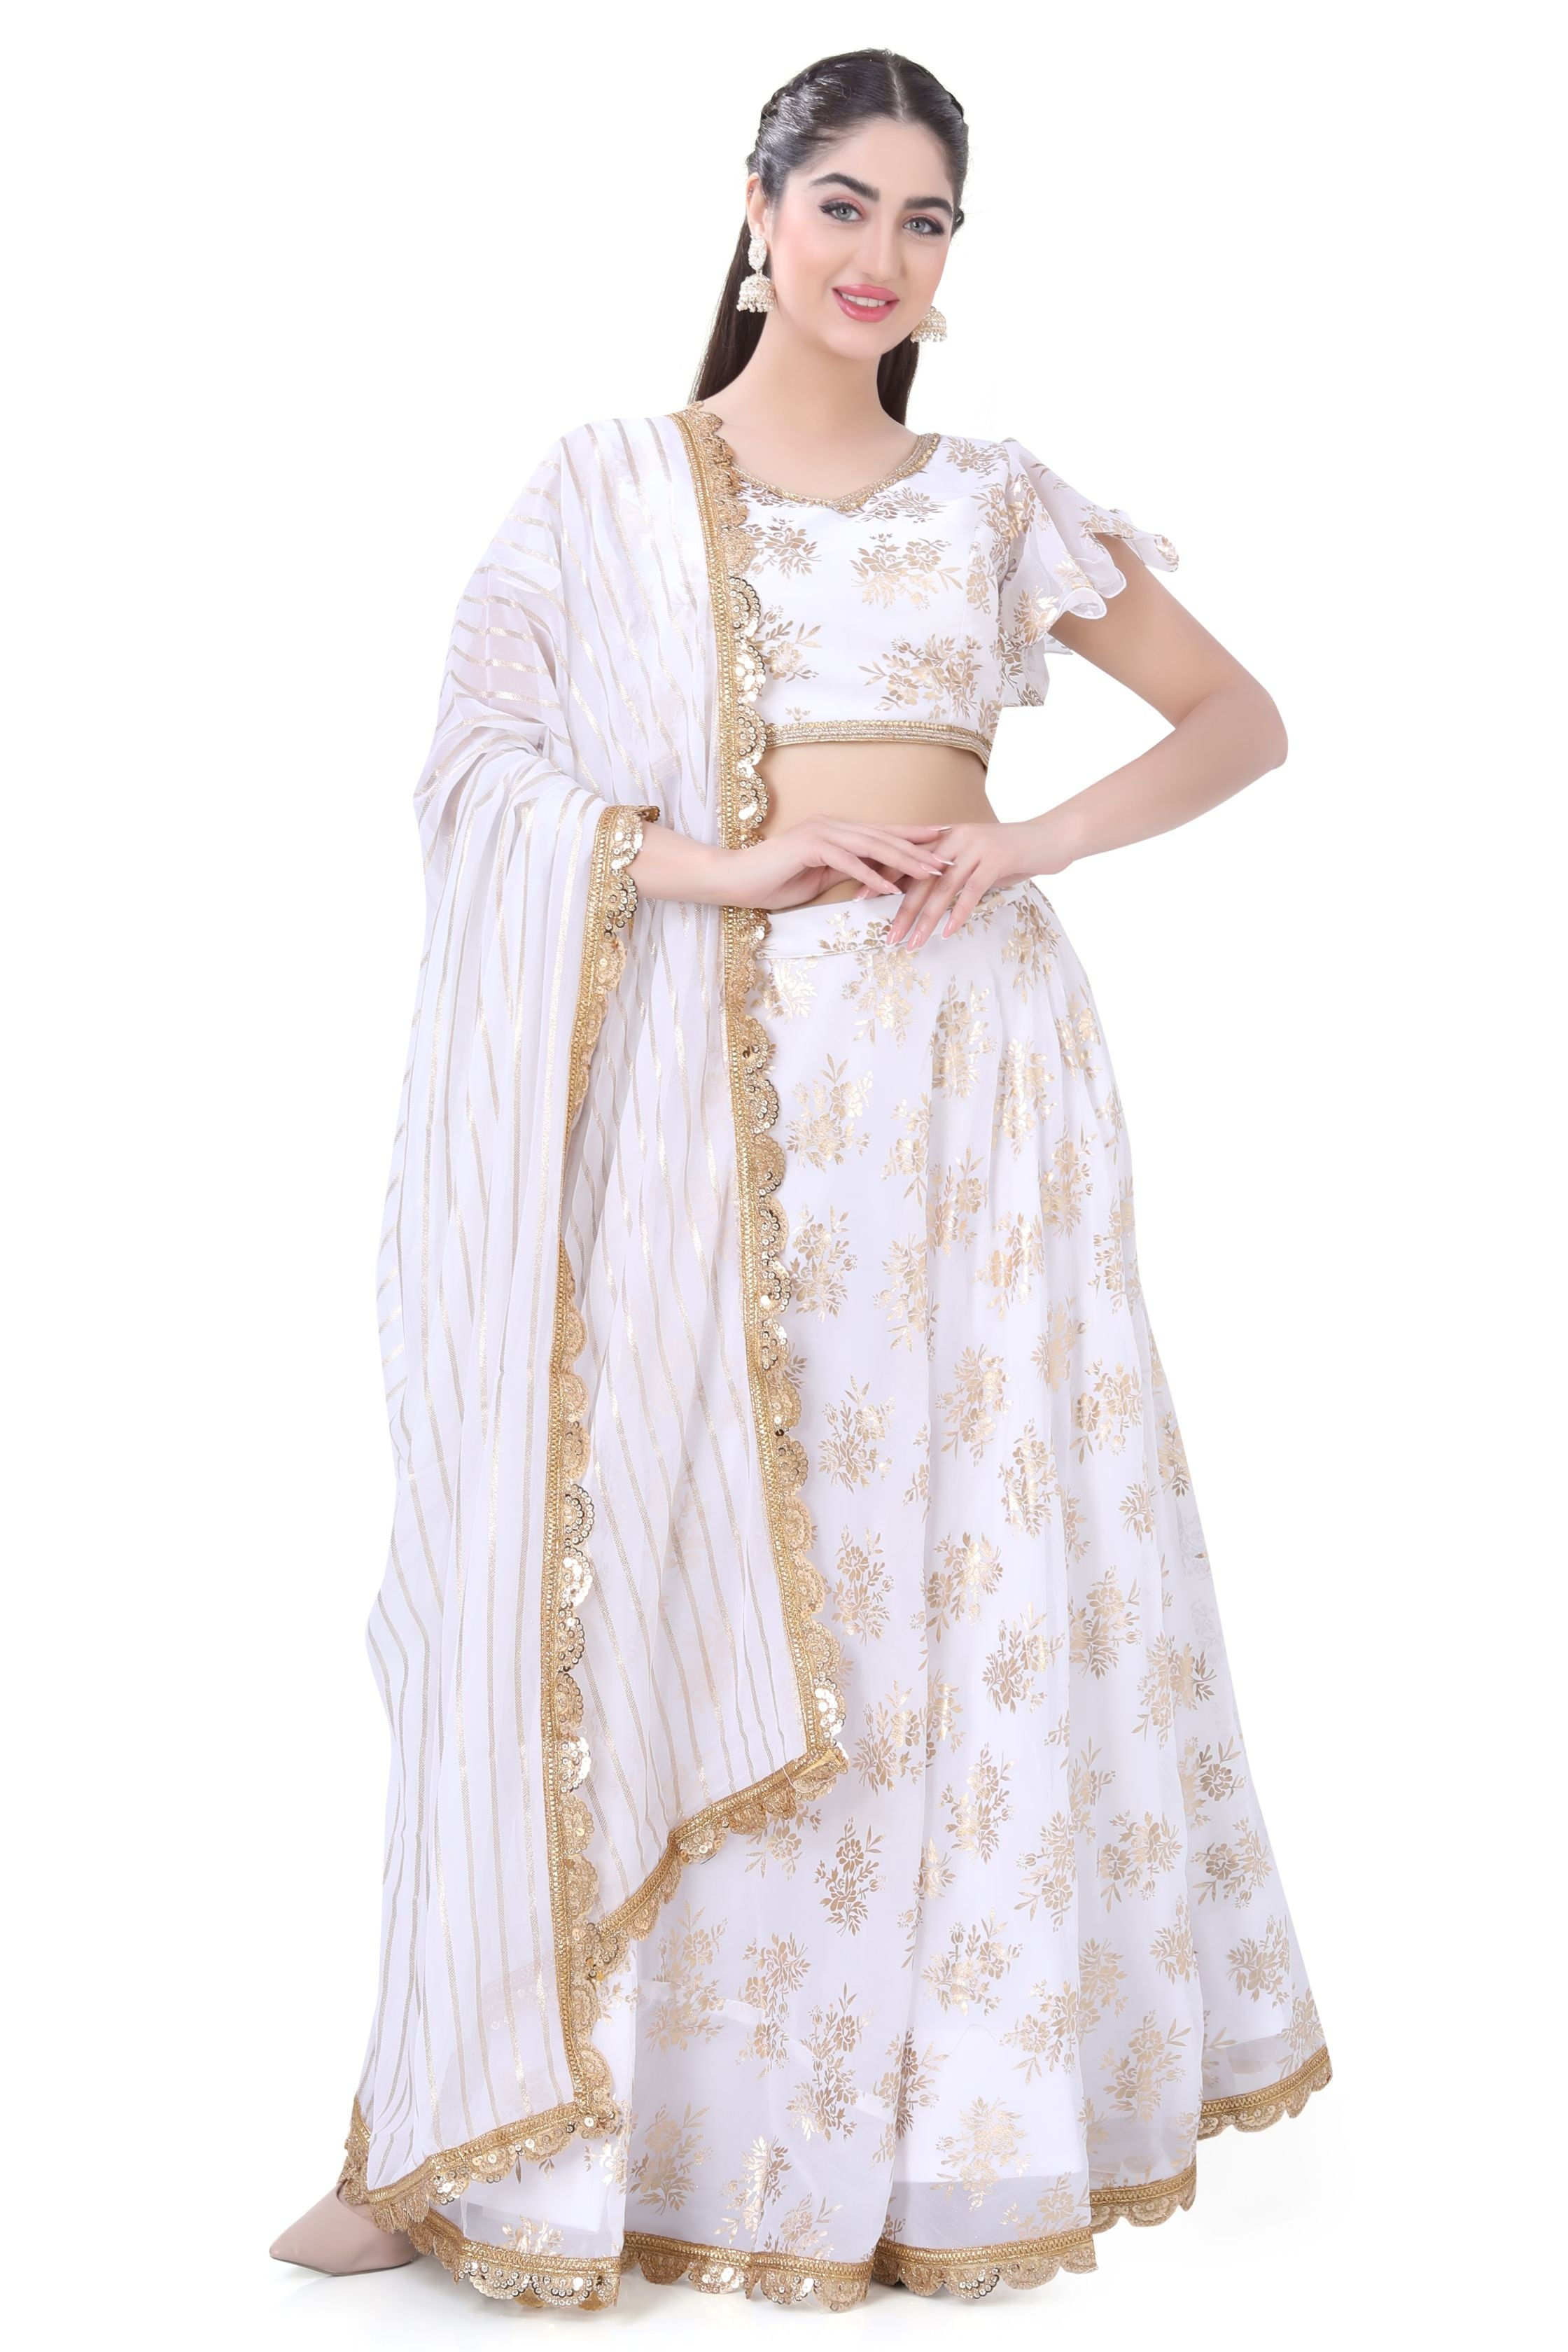 White Foil Print Lehenga choli - Premium Partywear Lehenga from Dulhan Exclusives - Just $175! Shop now at Dulhan Exclusives